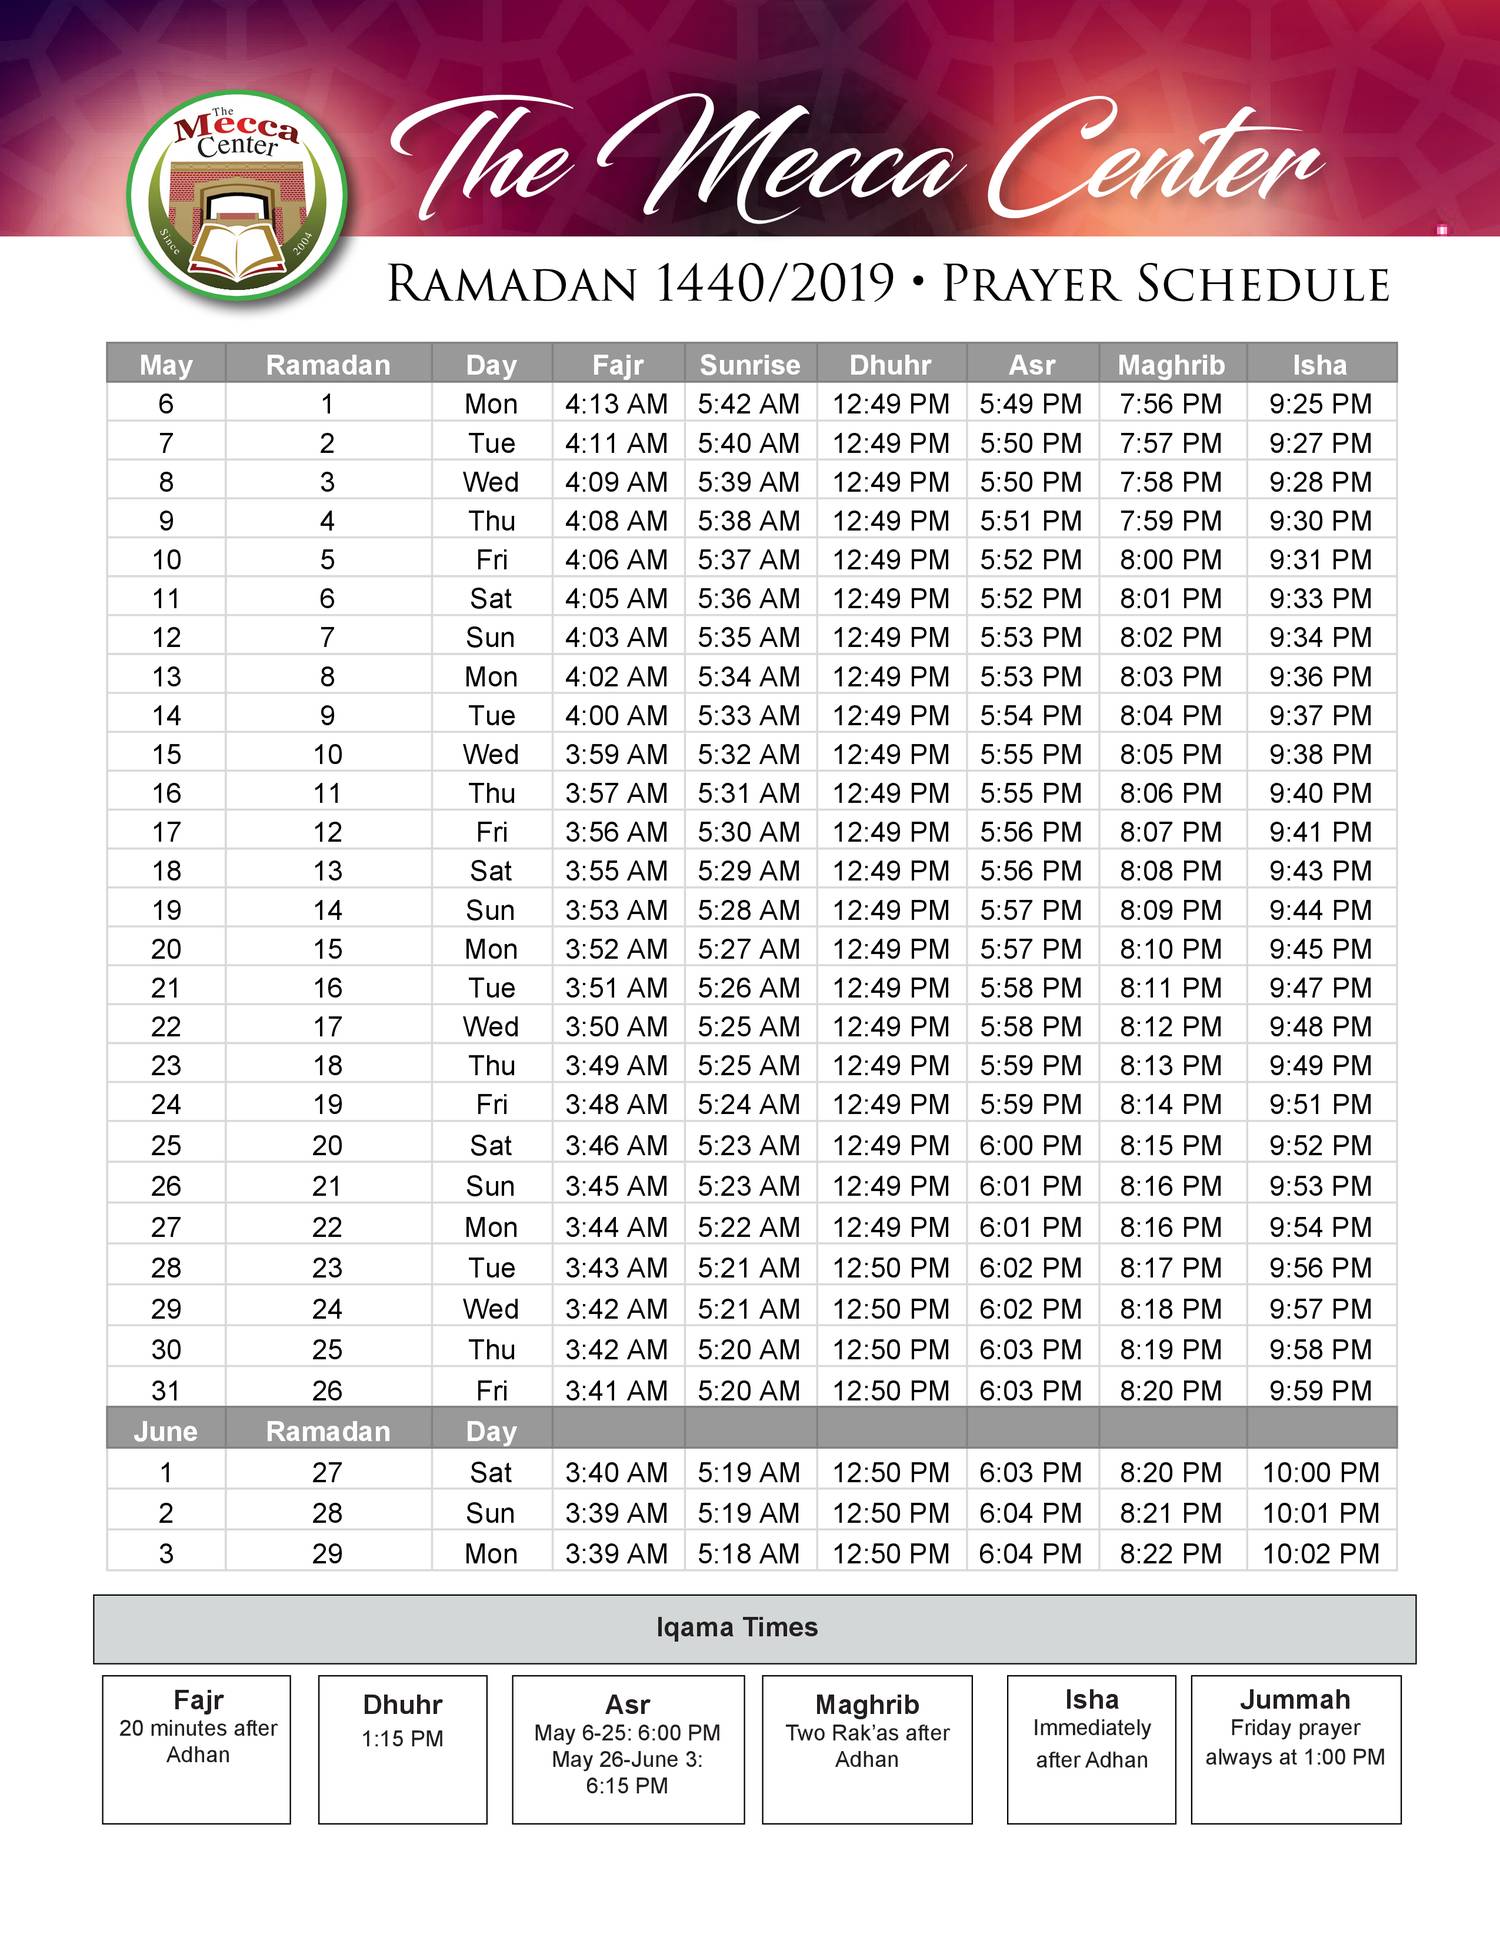 The Mecca Center Ramadan 2019/1440 Prayer Schedule.pdf DocDroid